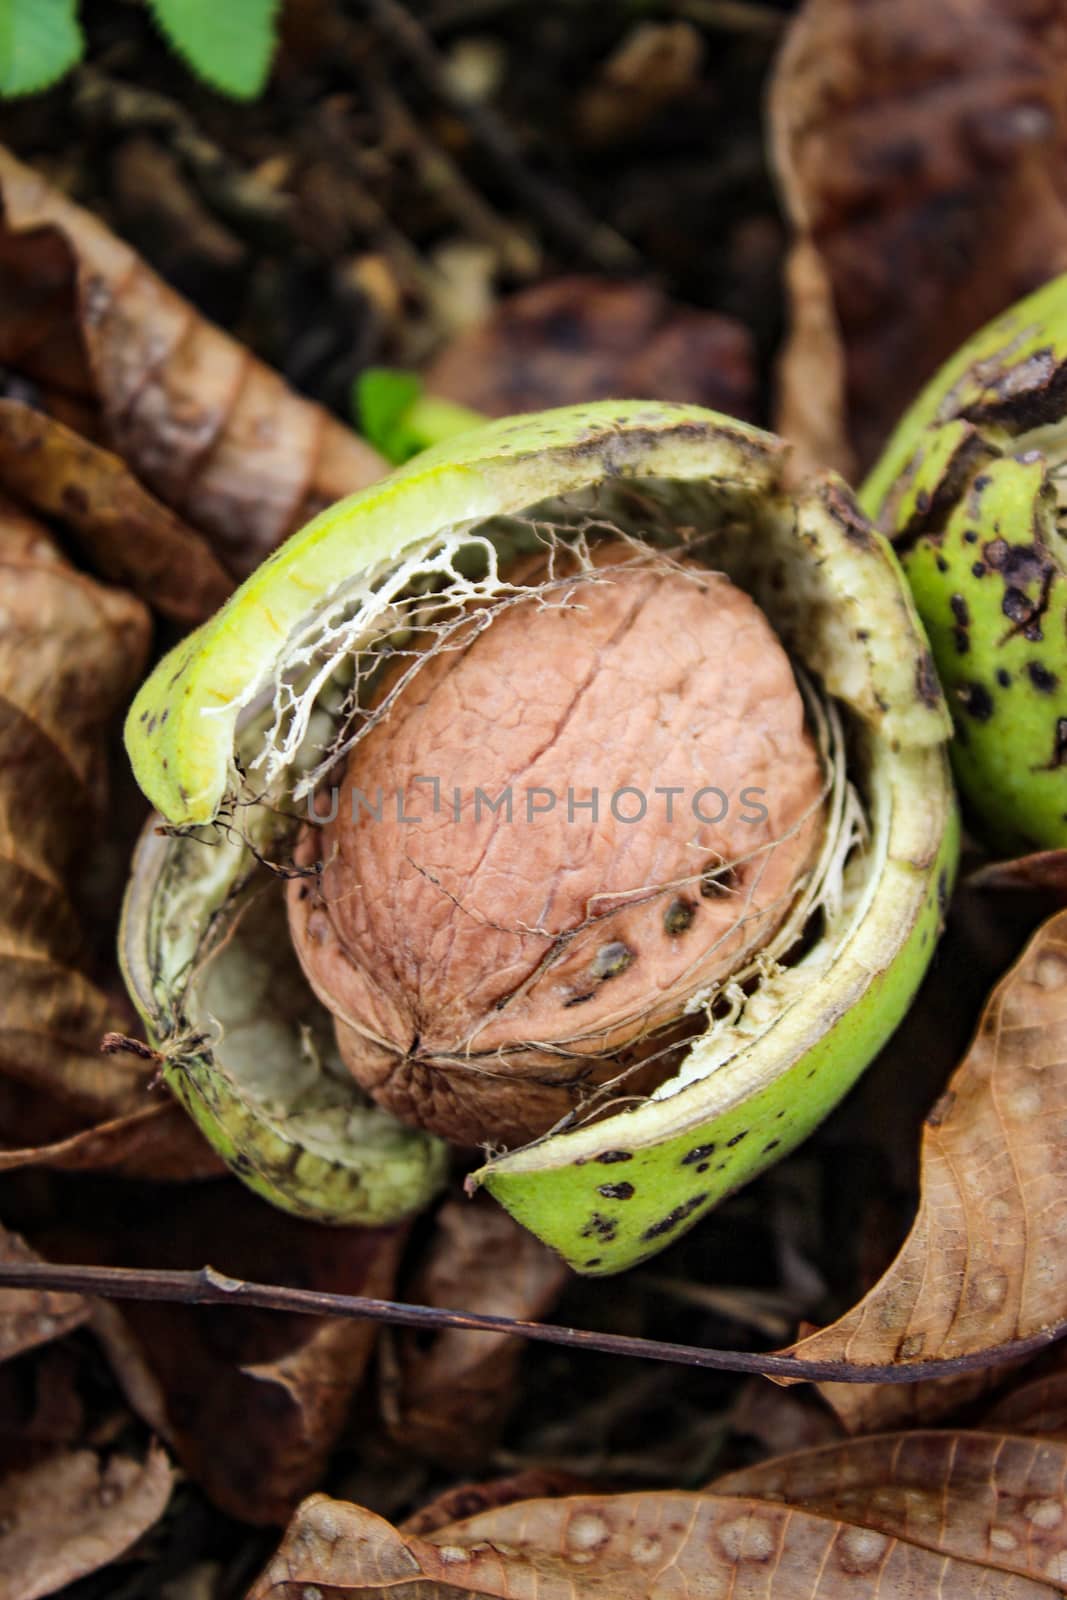 A ripe walnut inside the green shell fell to the floor among the dried leaves. Zavidovici, Bosnia and Herzegovina.